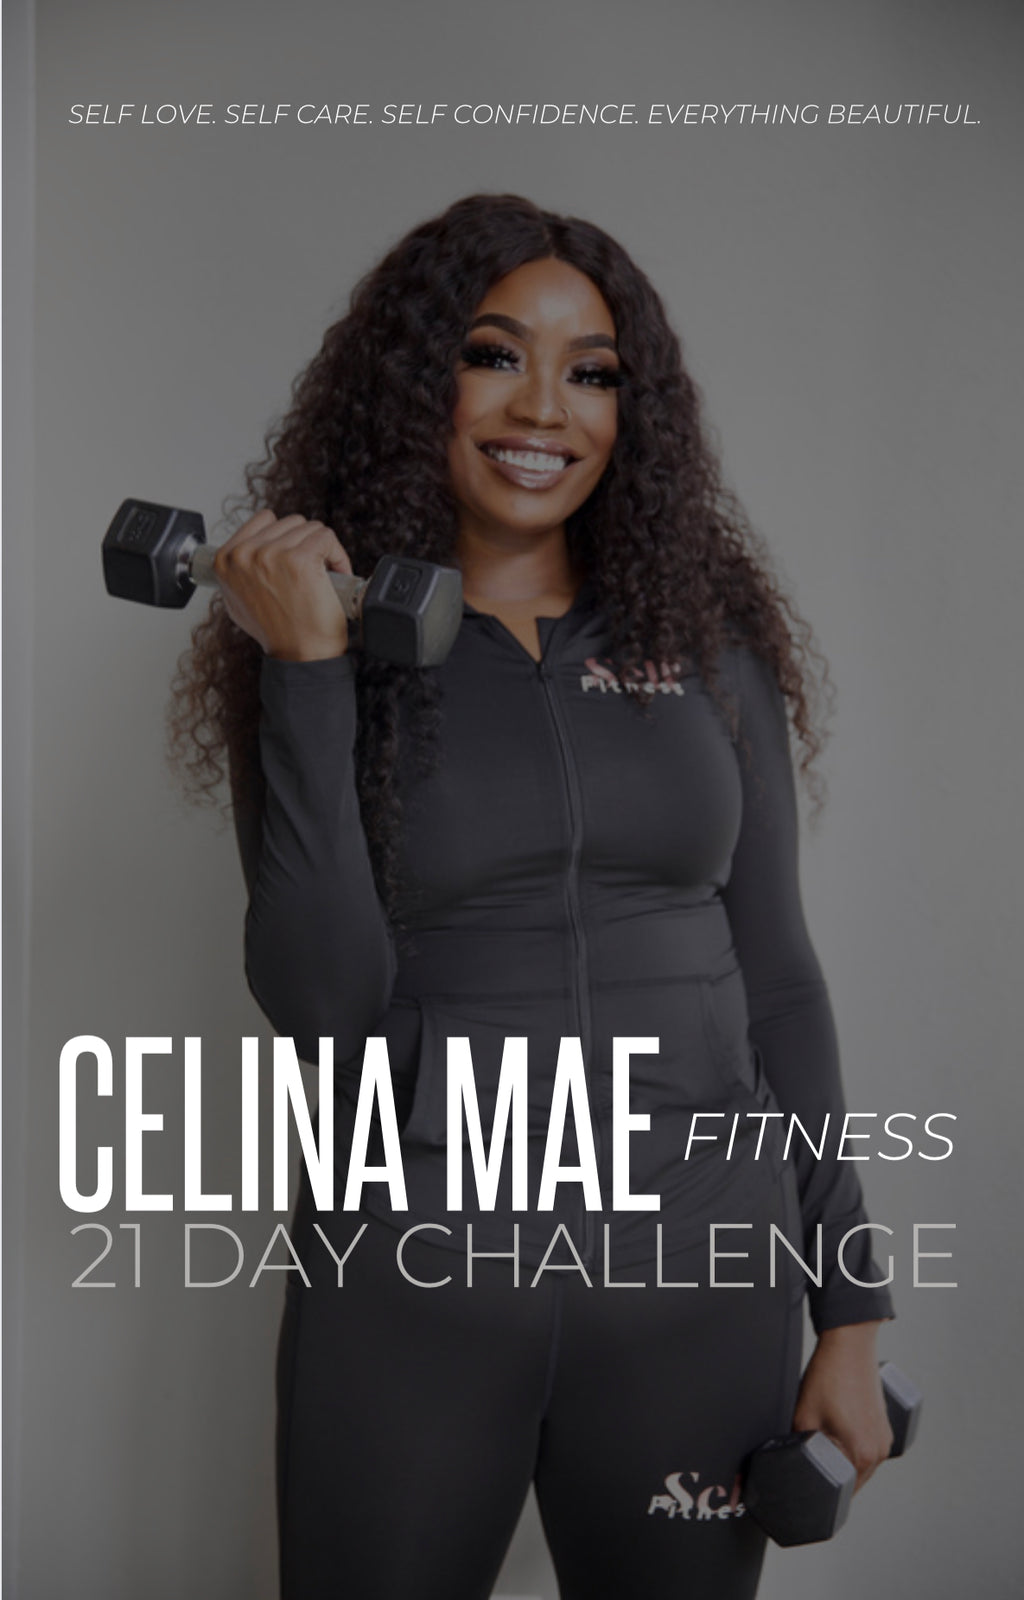 Celina Mae’s 21 Day Challenge